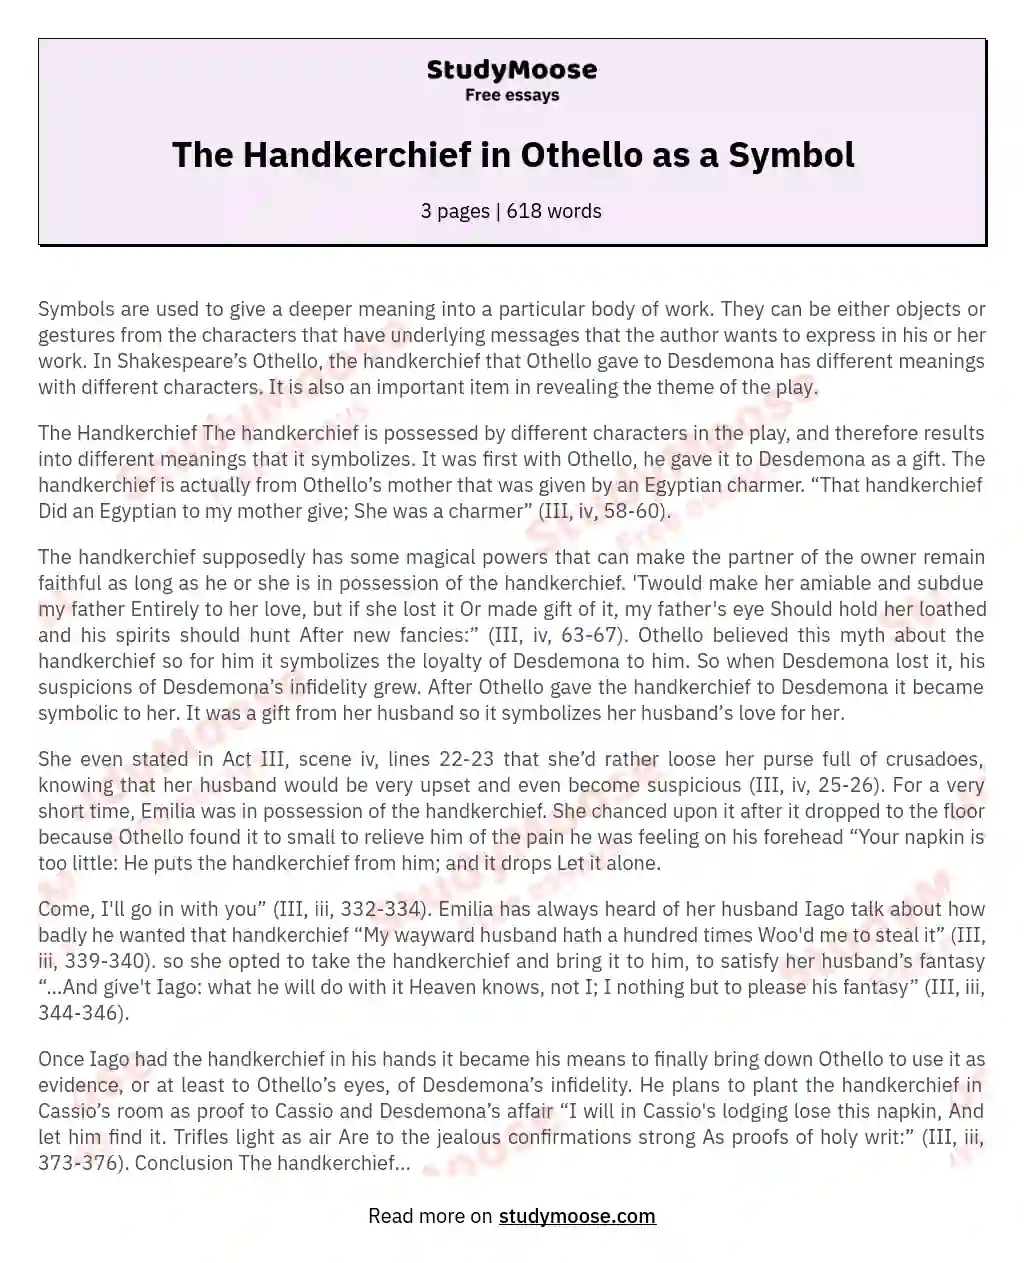 The Handkerchief in Othello as a Symbol essay